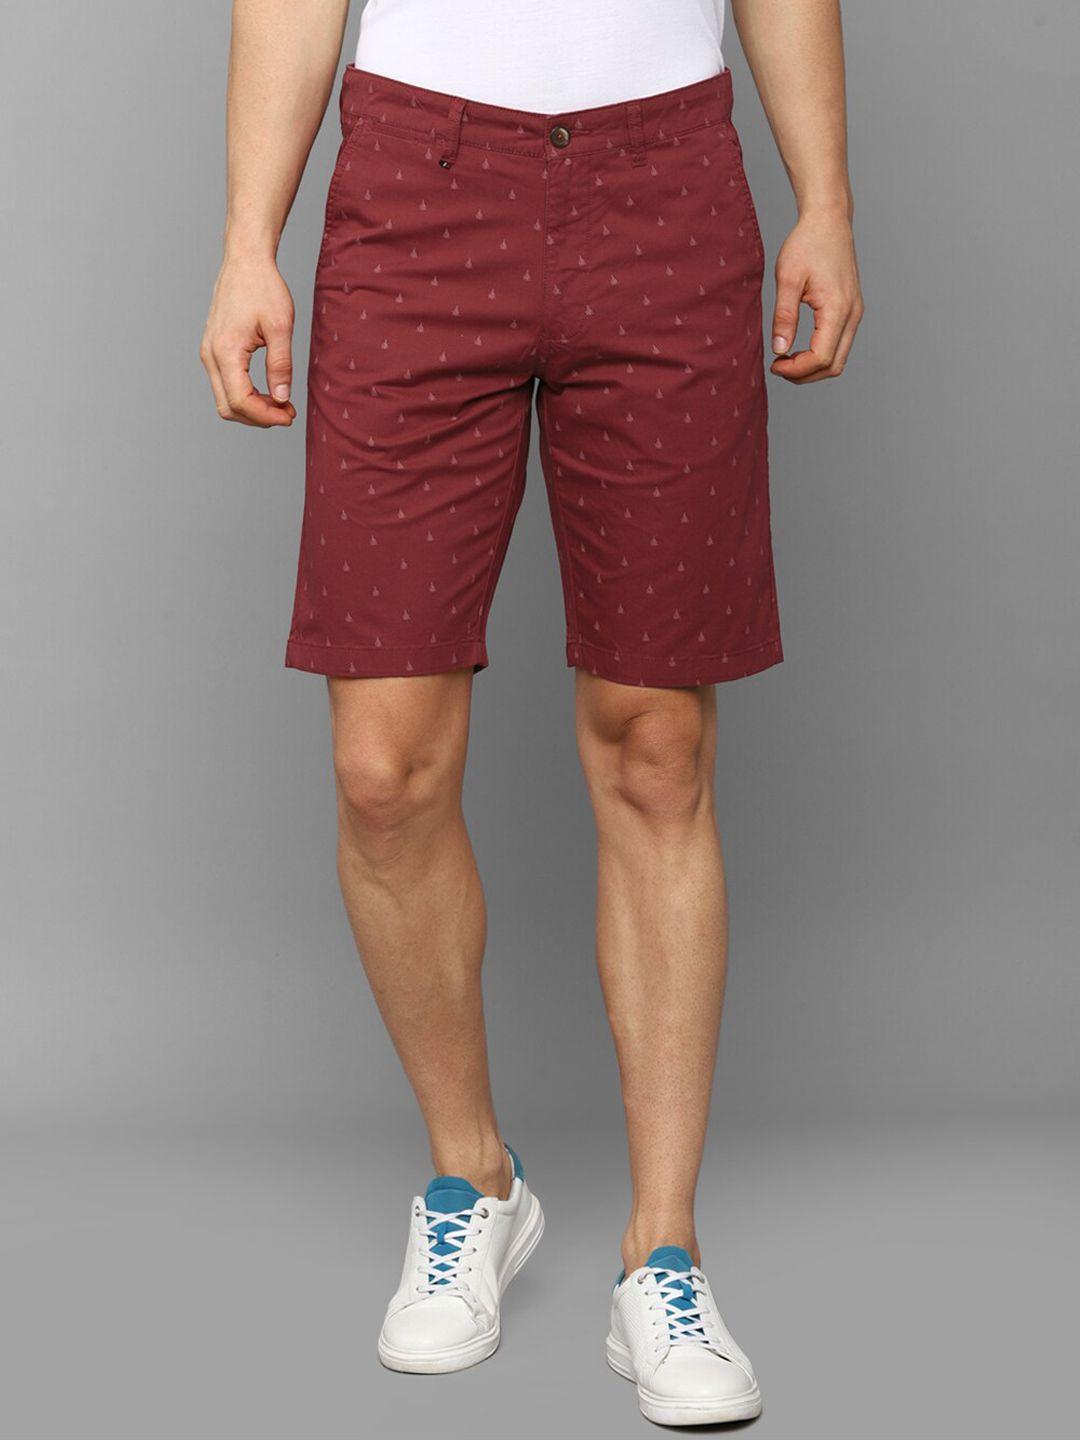 louis philippe sport men maroon printed slim fit shorts